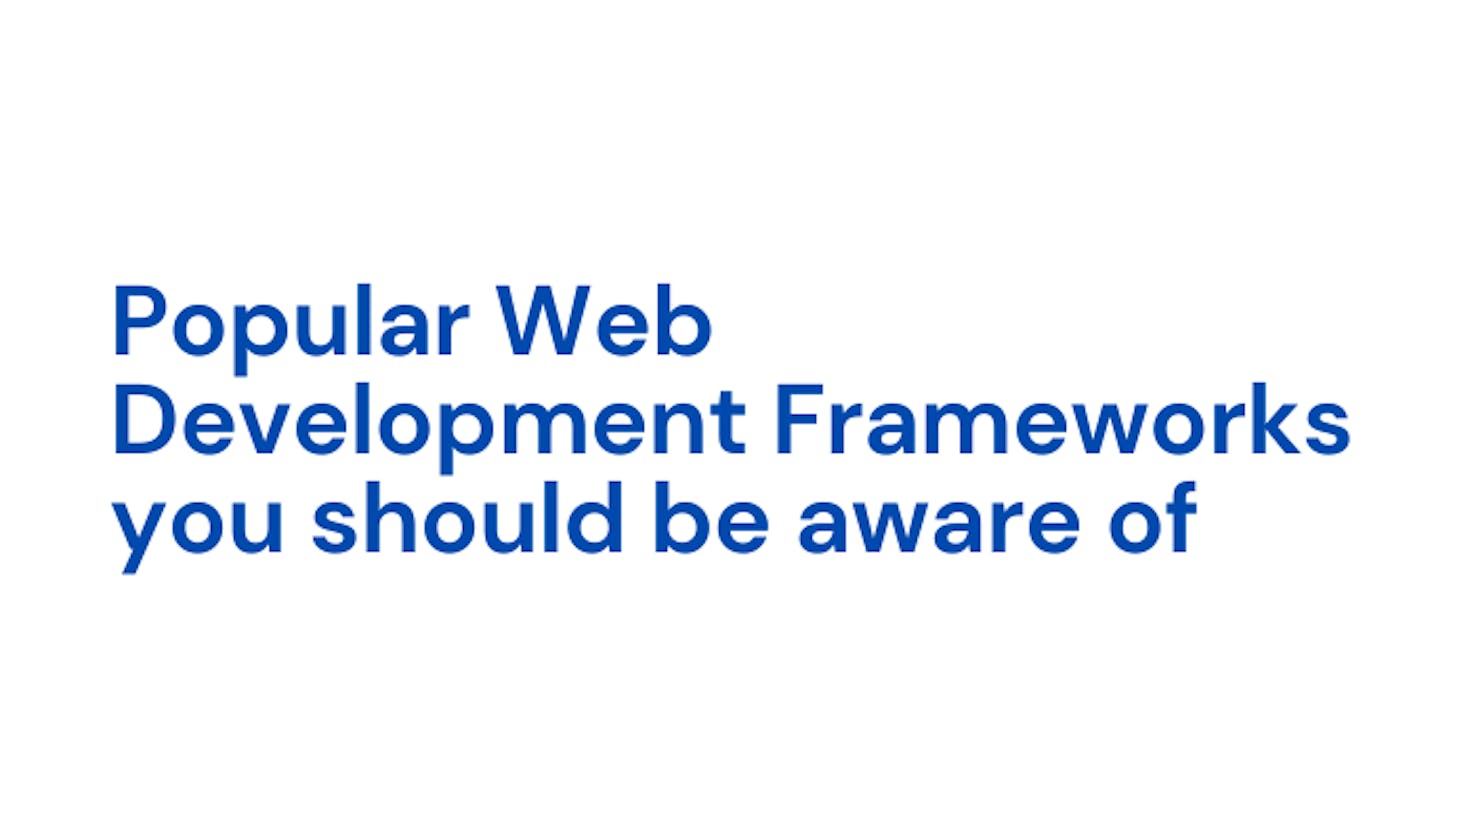 Popular Web Development Frameworks you should be aware of